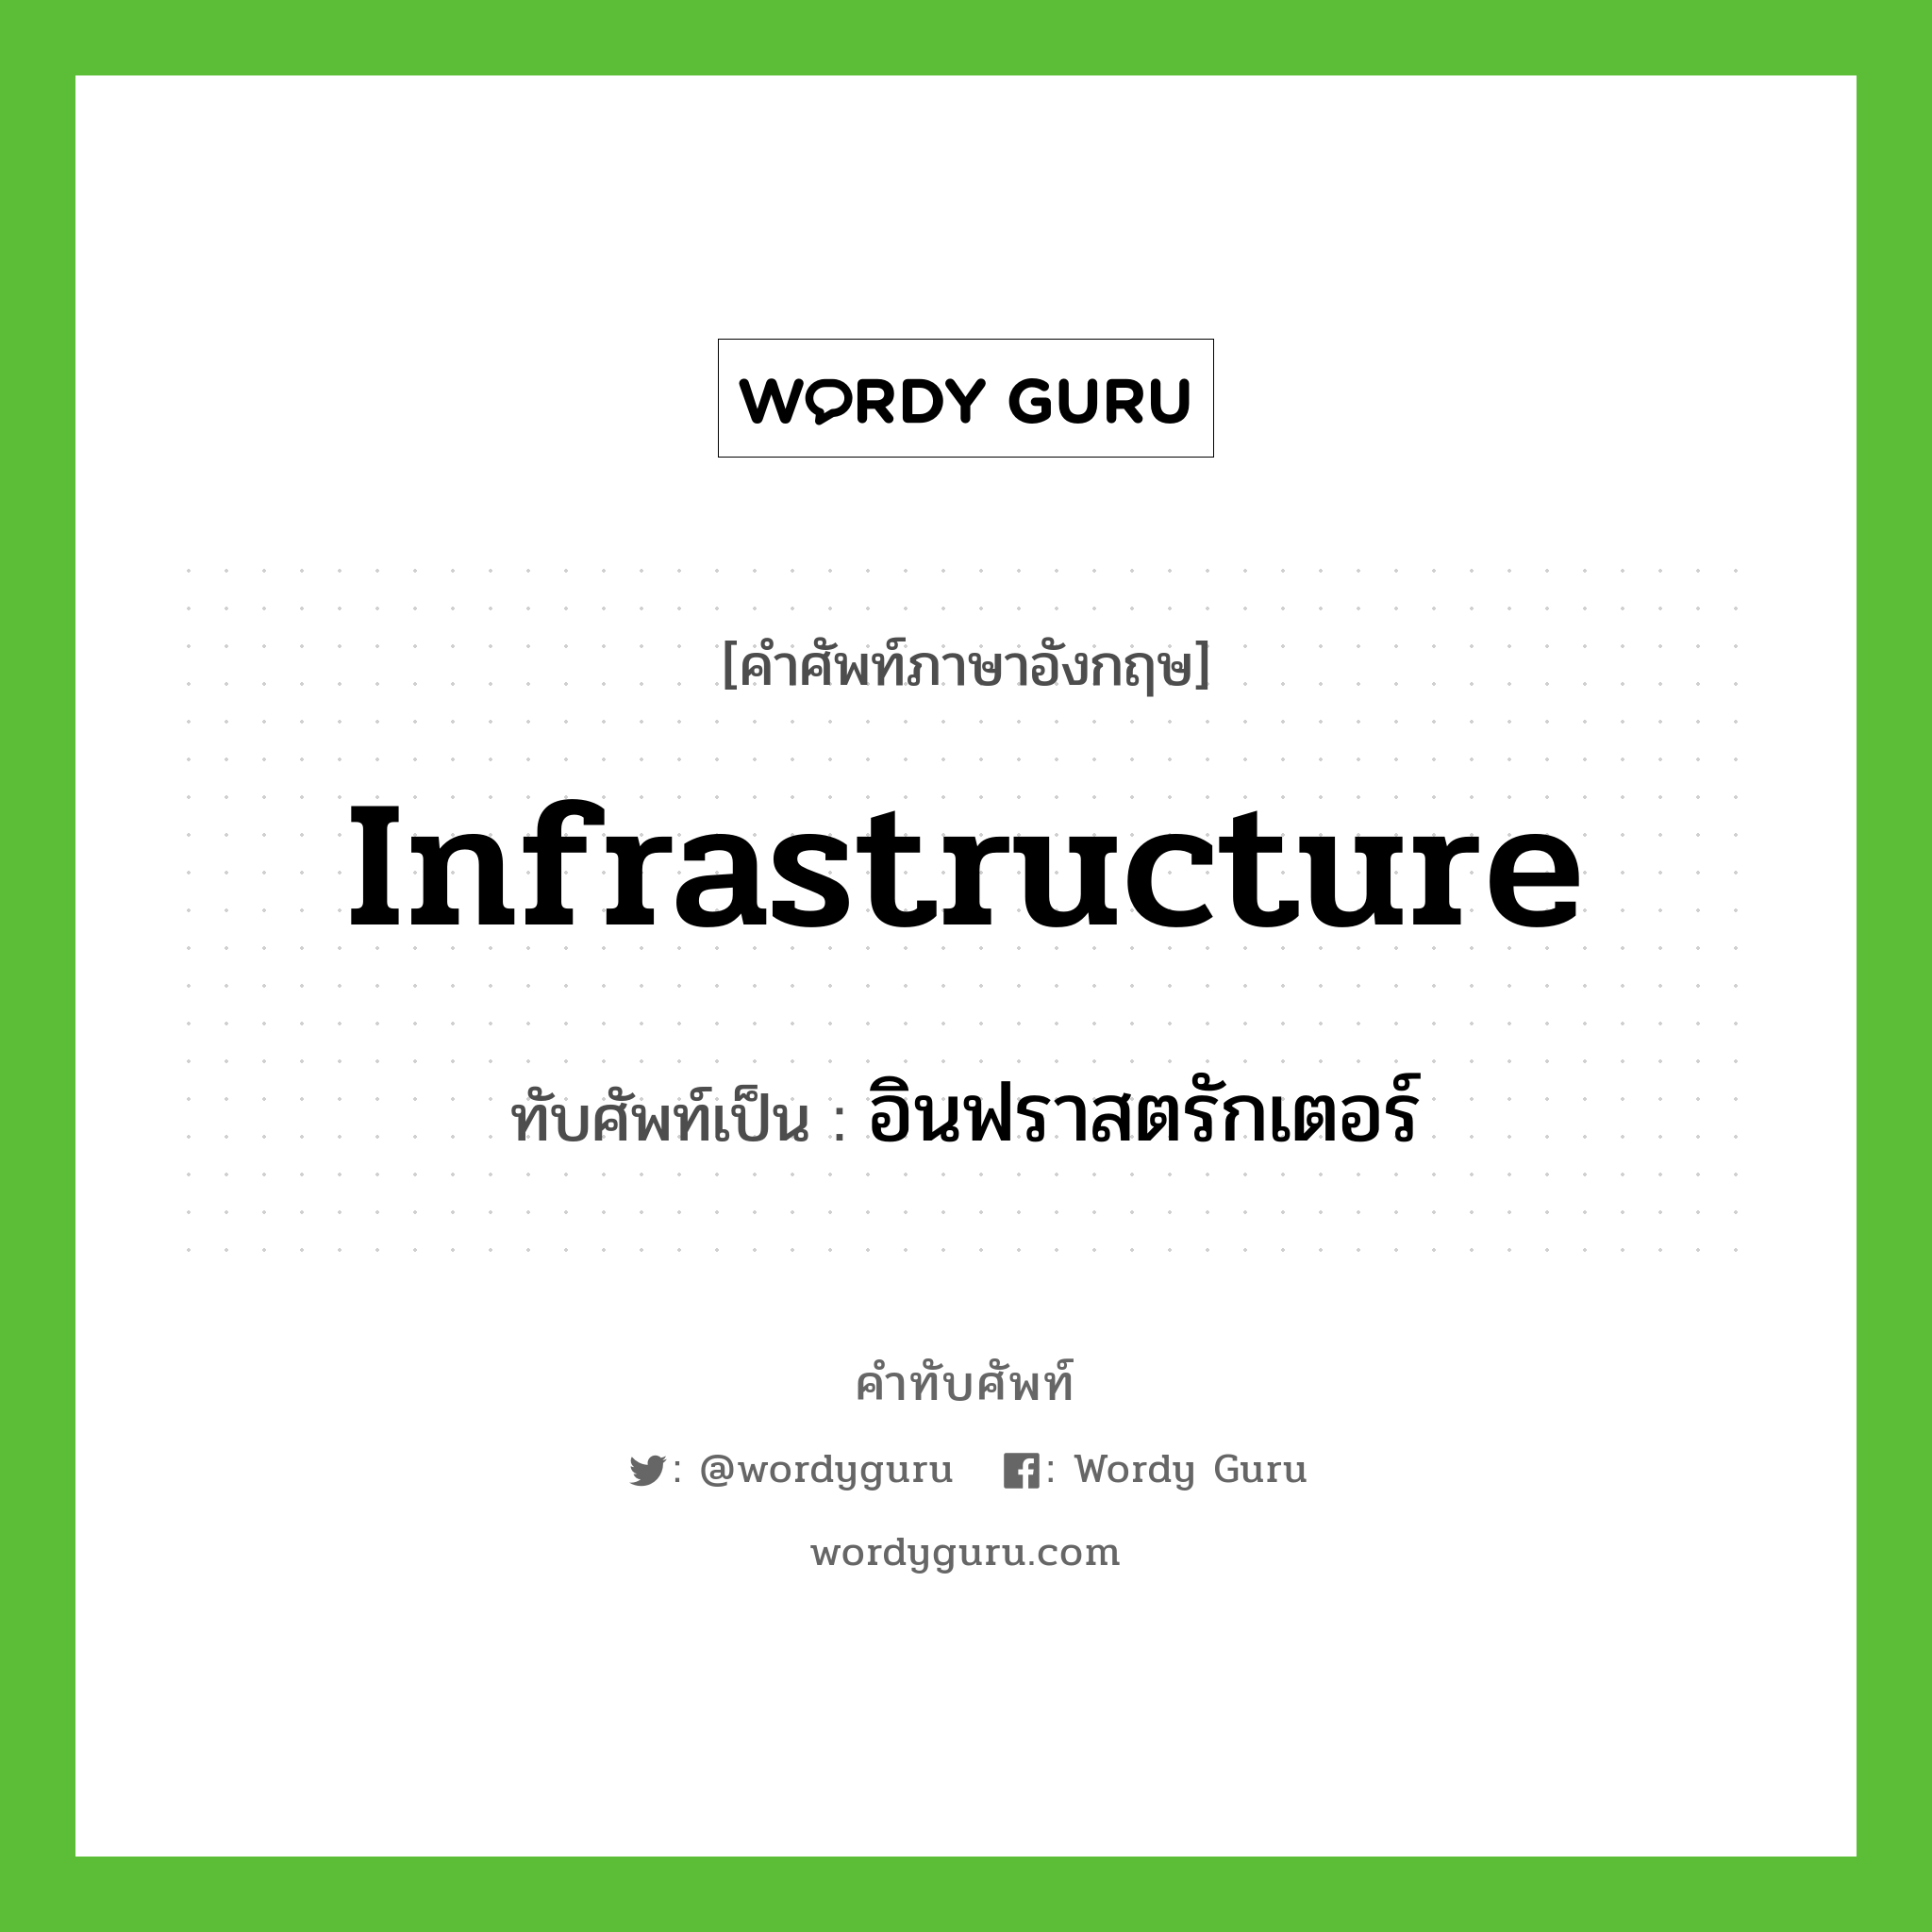 infrastructure เขียนเป็นคำไทยว่าอะไร?, คำศัพท์ภาษาอังกฤษ infrastructure ทับศัพท์เป็น อินฟราสตรักเตอร์